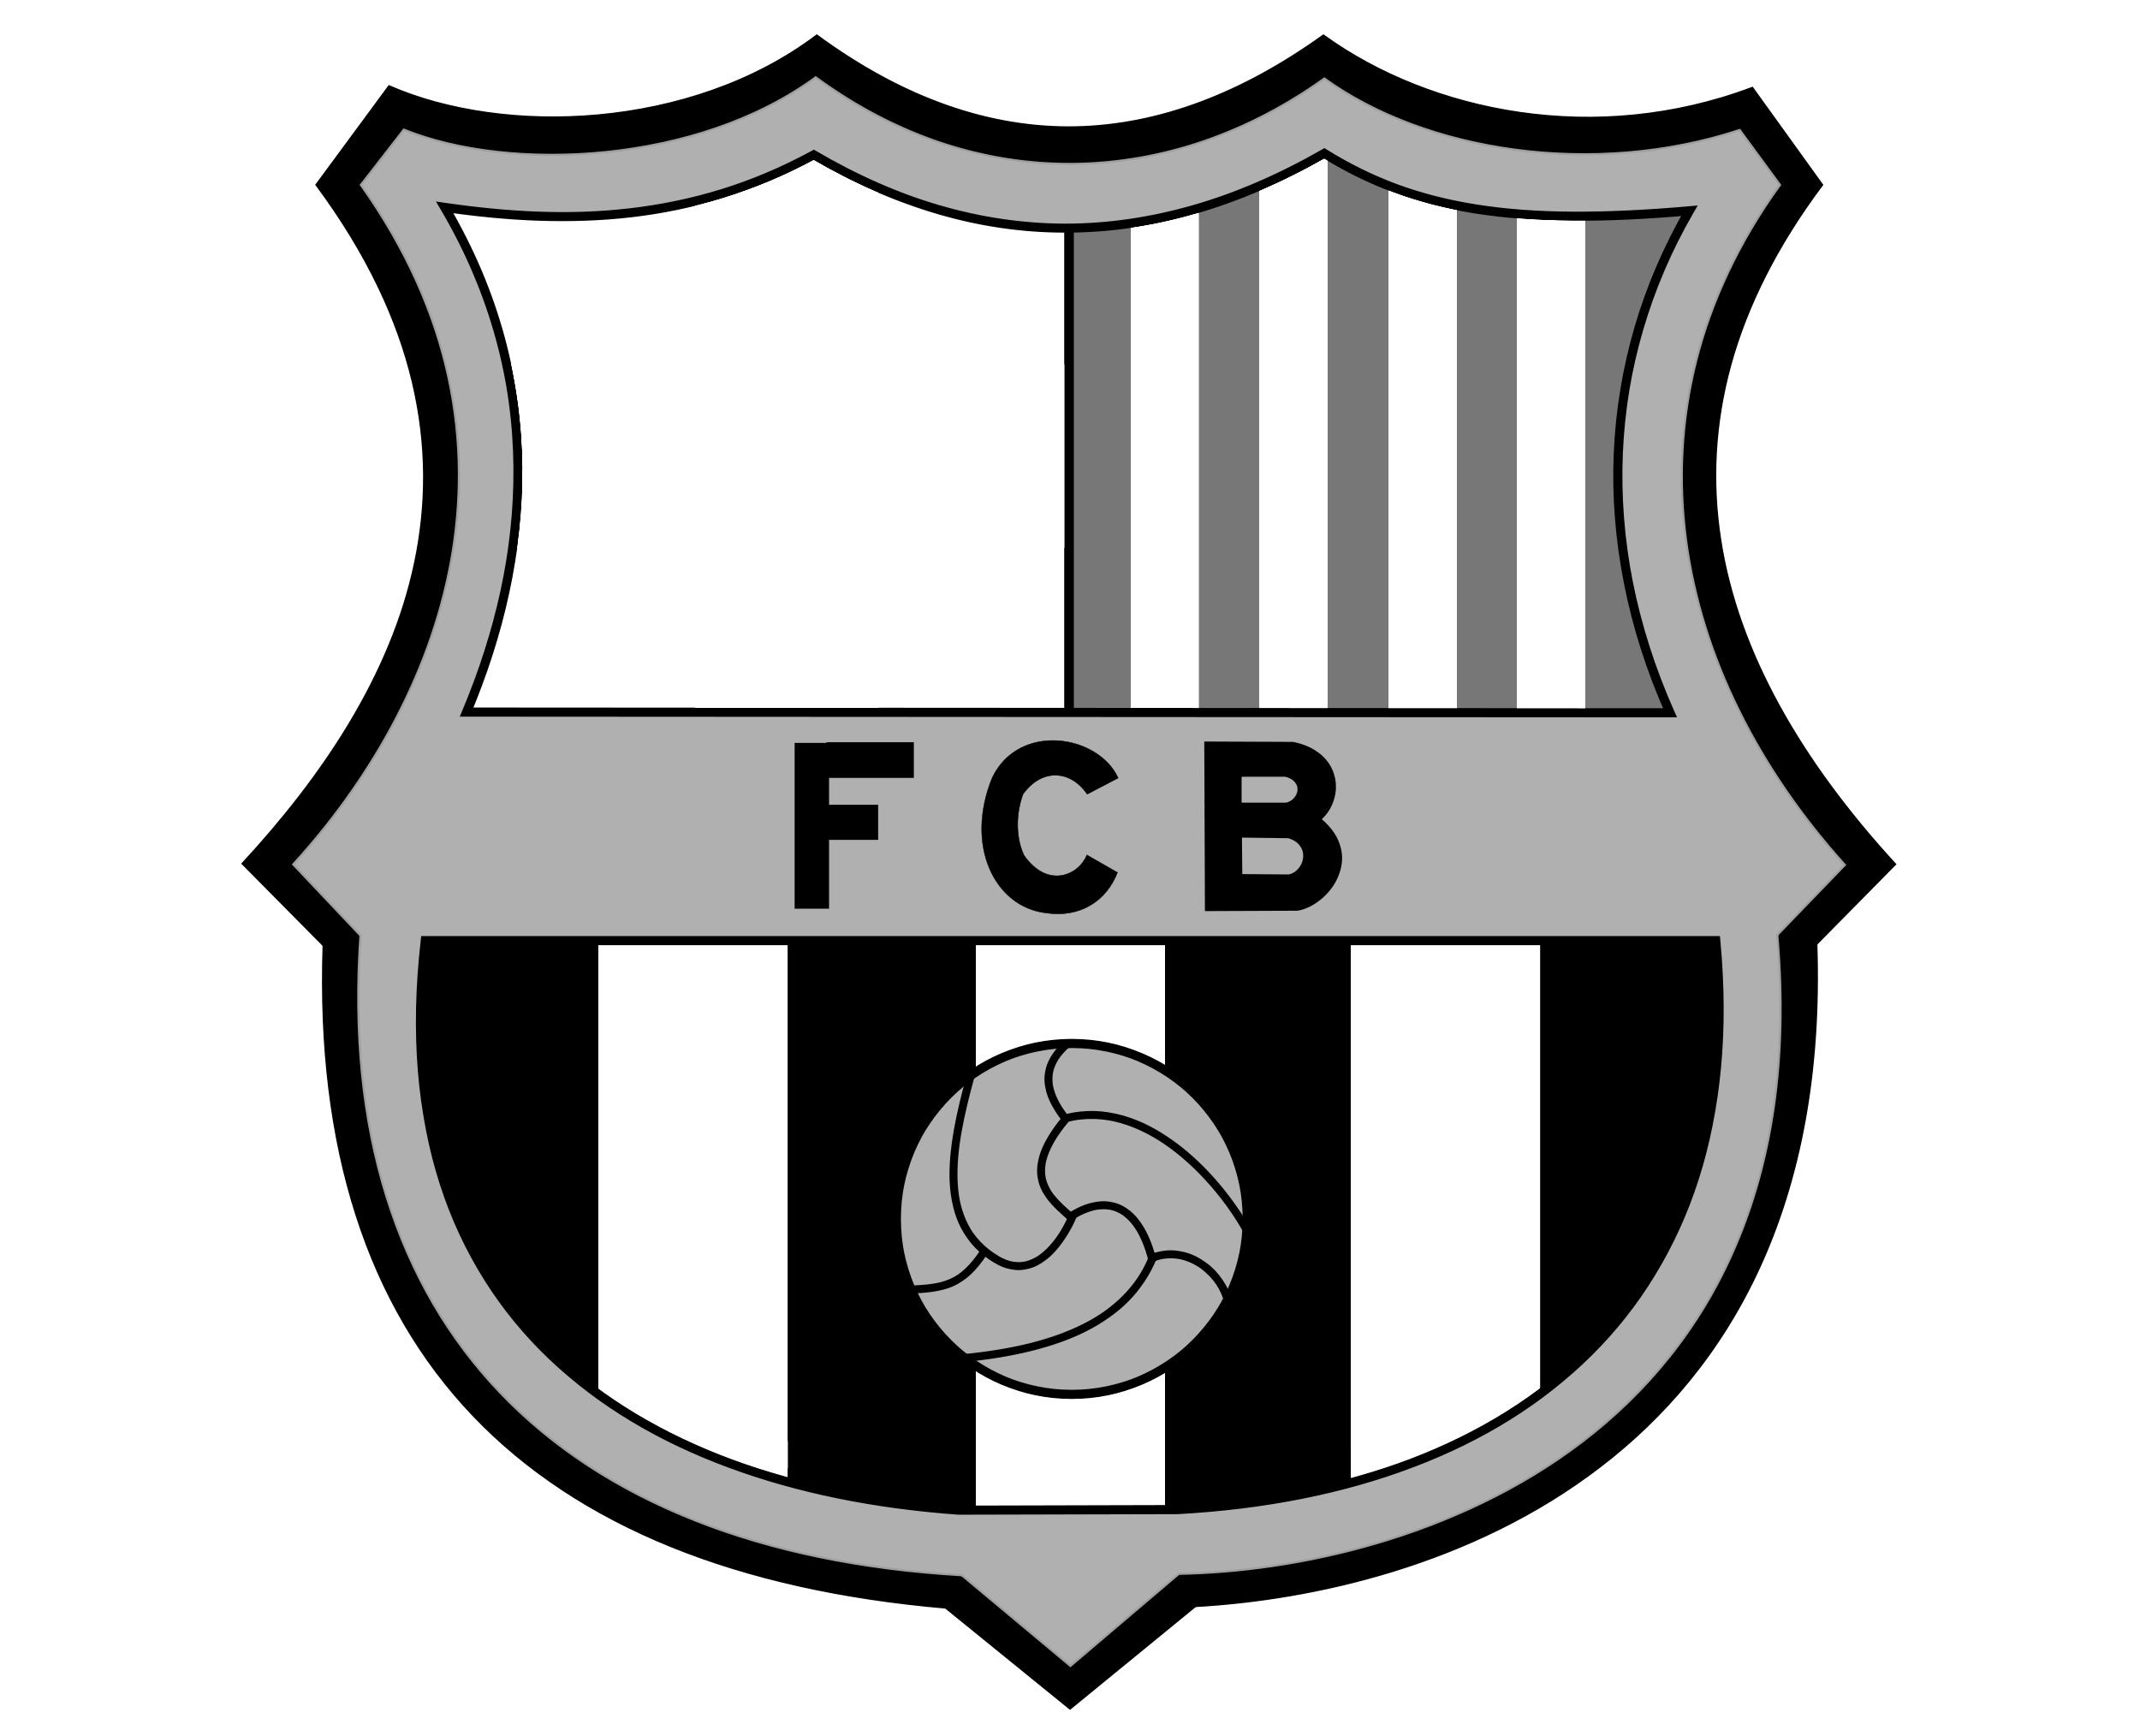 fc-barcelona-logo-histoire-et-signification-evolution-symbole-fc